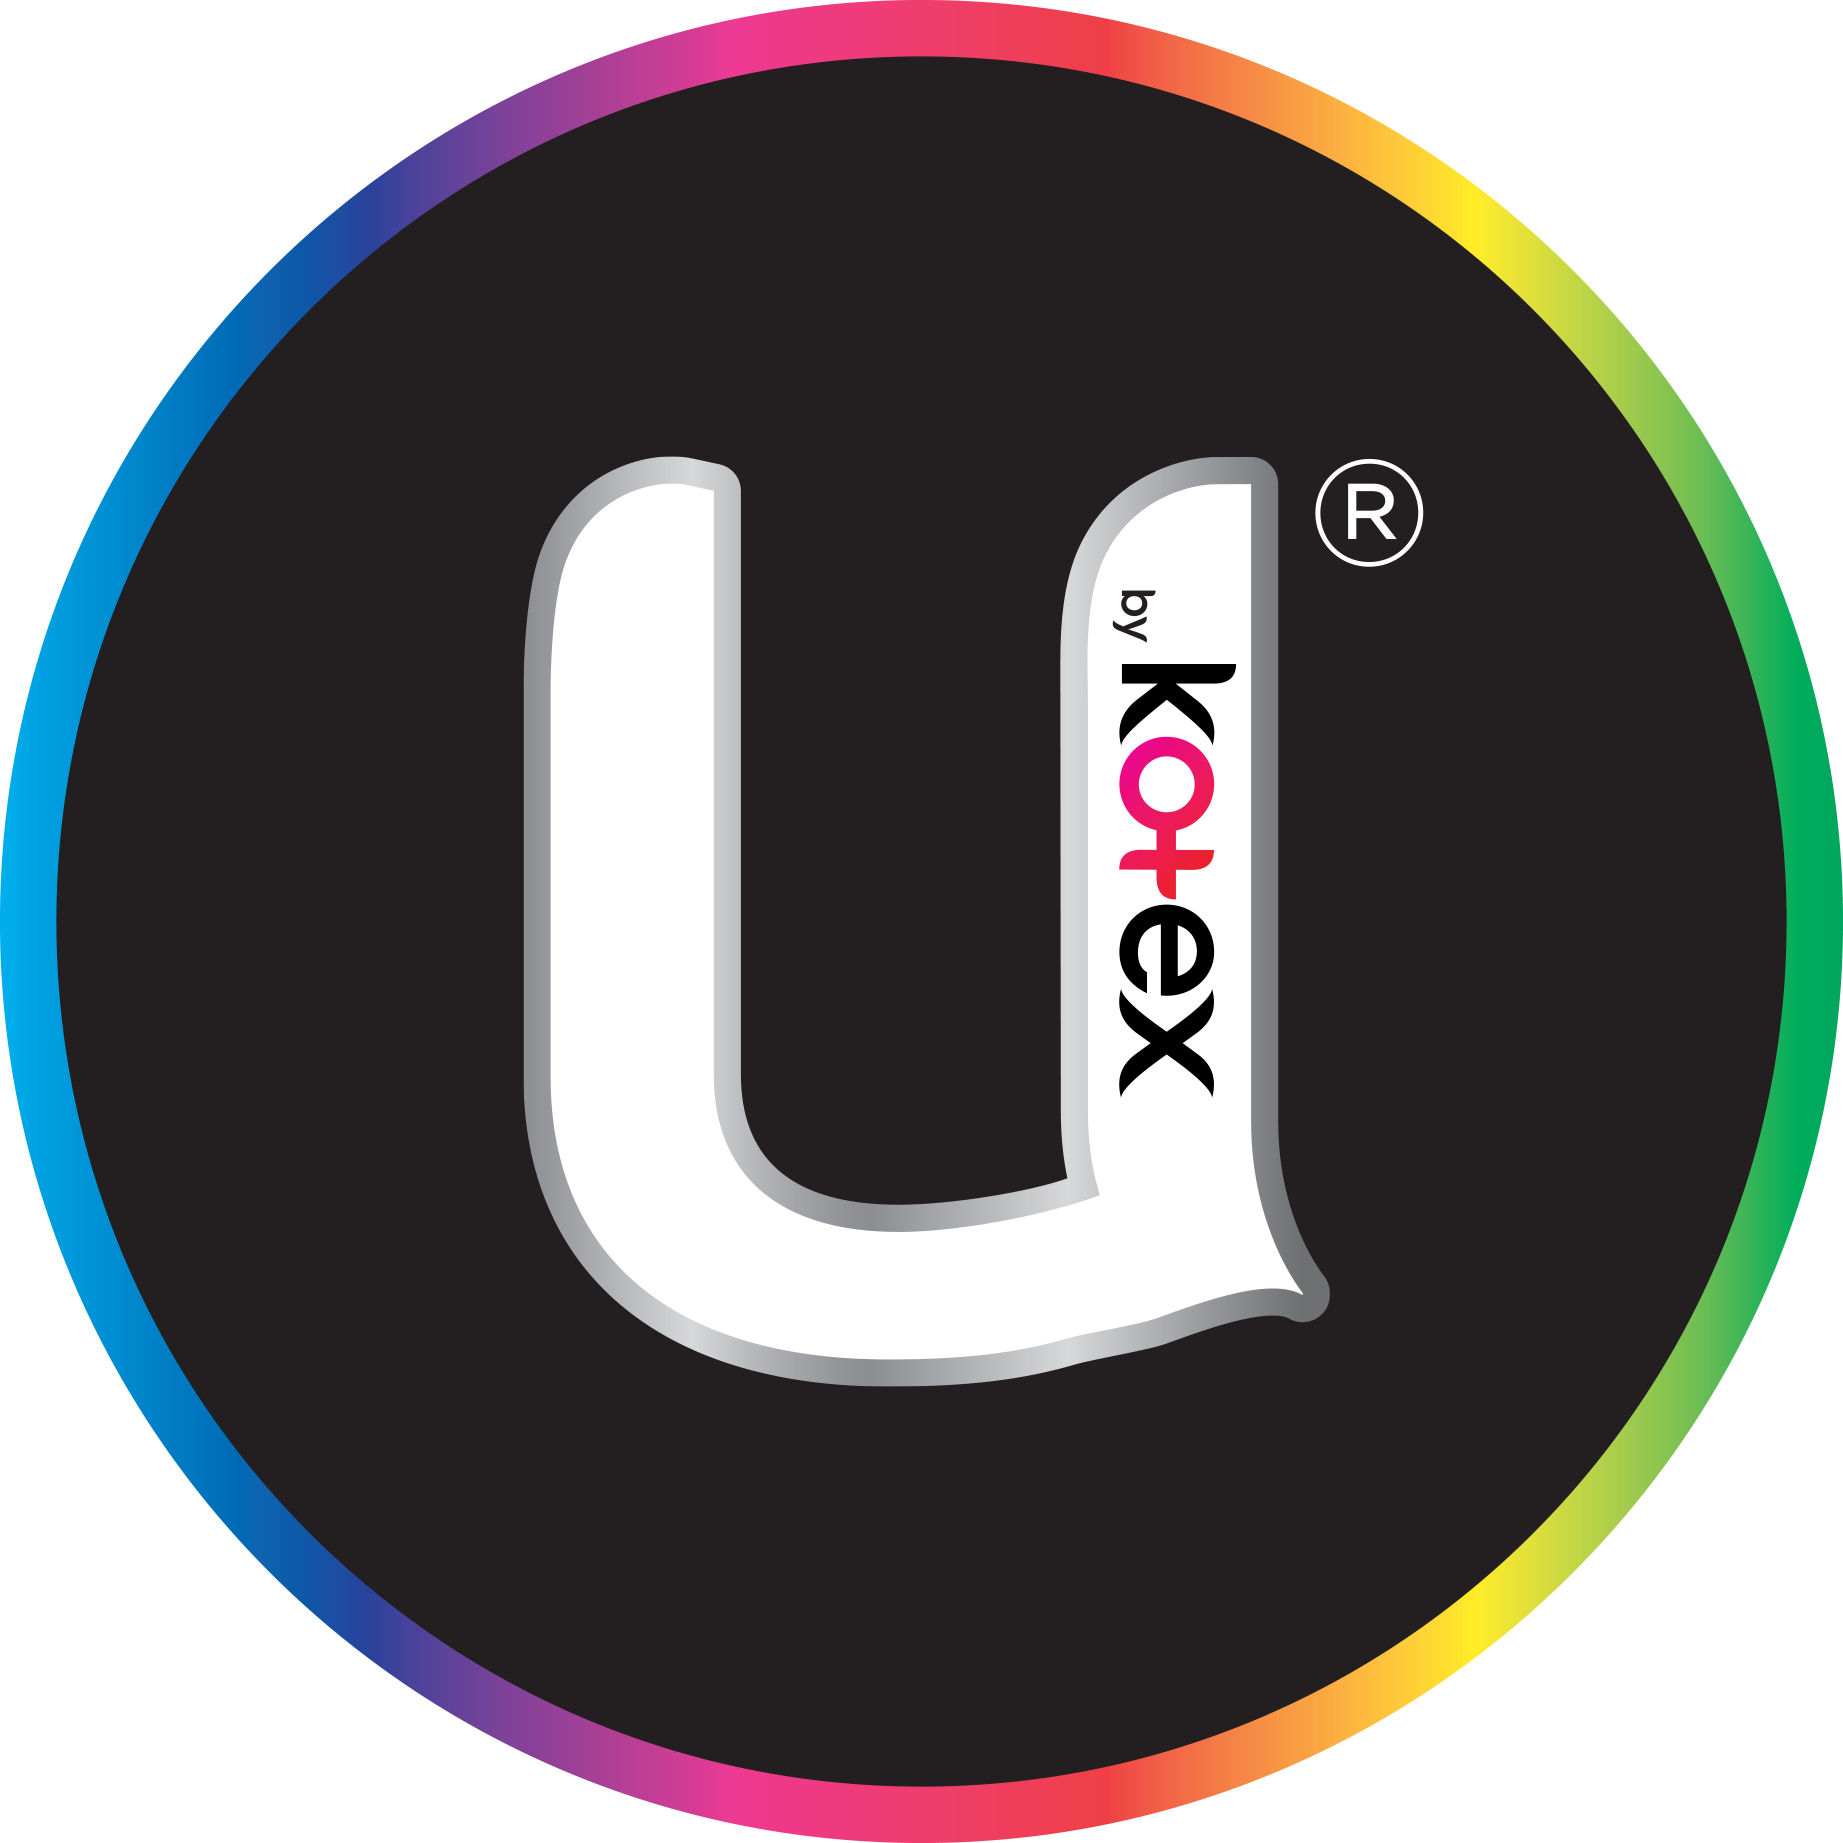 u by Kotex logo